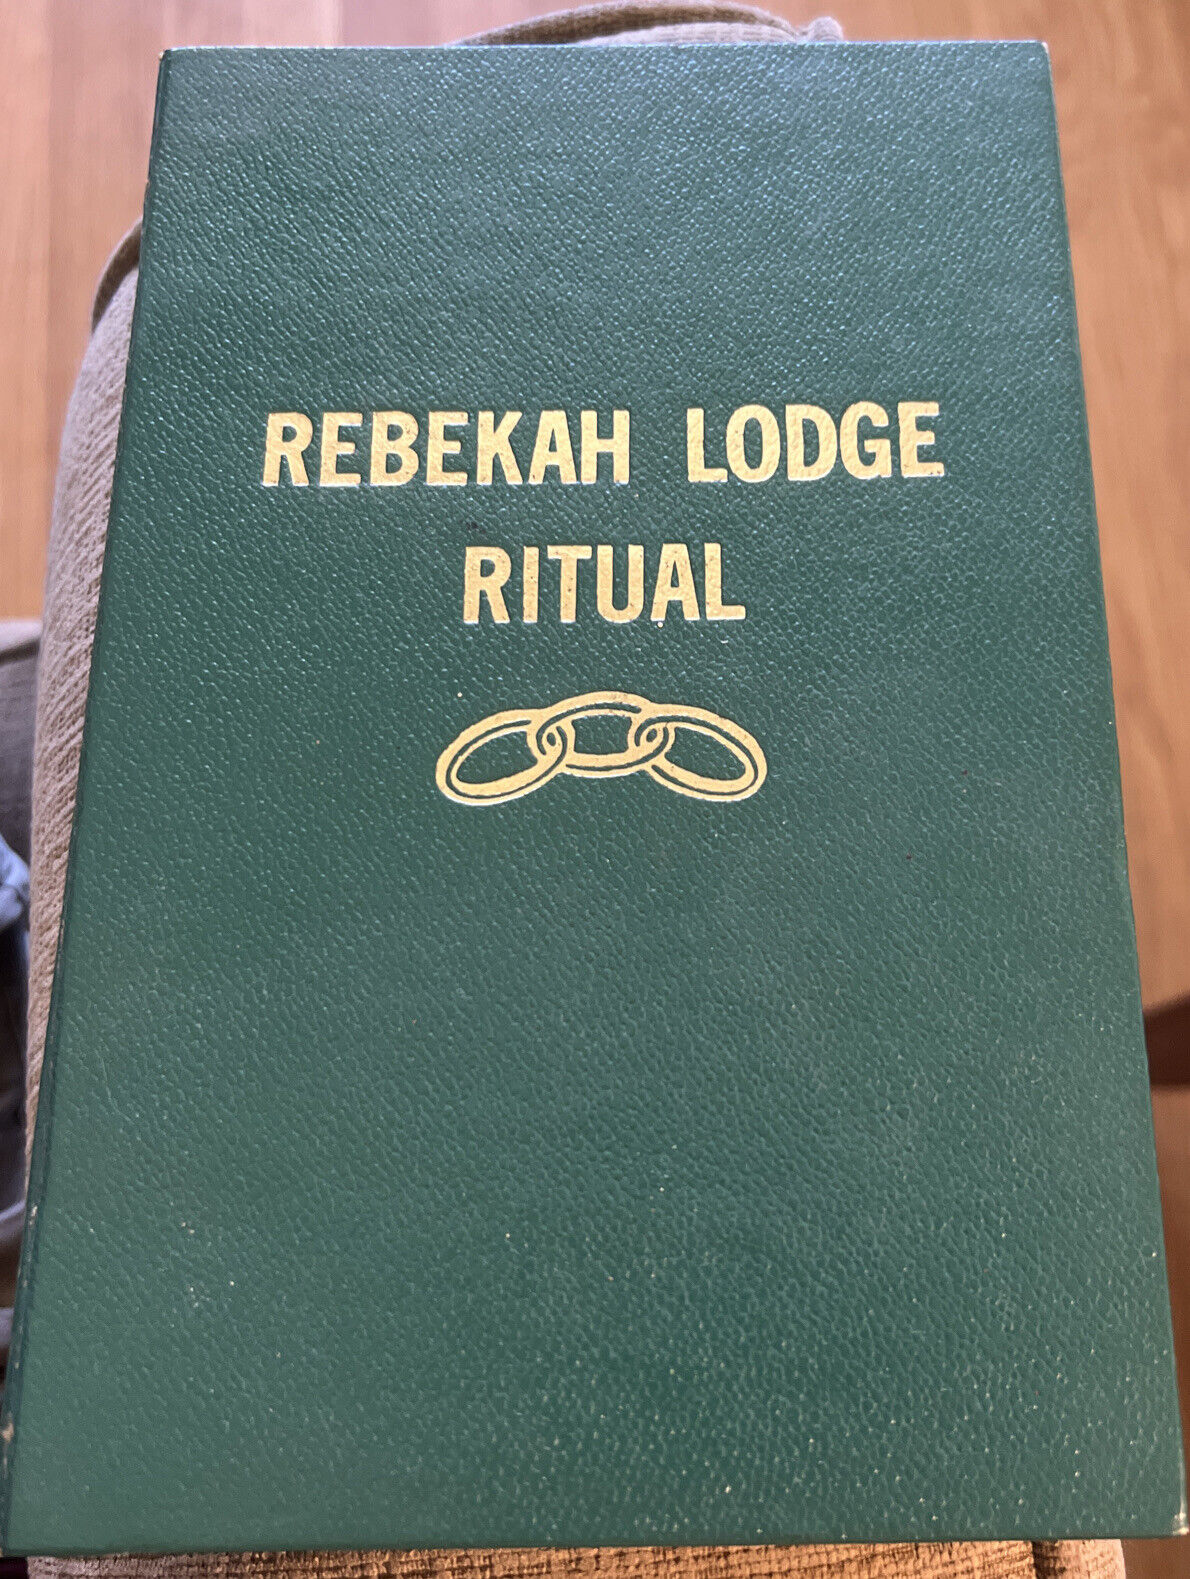 Rebekah Lodge Ritual 1980 Neodesha Lodge 252 Kansas Sovereign Grand Lodge